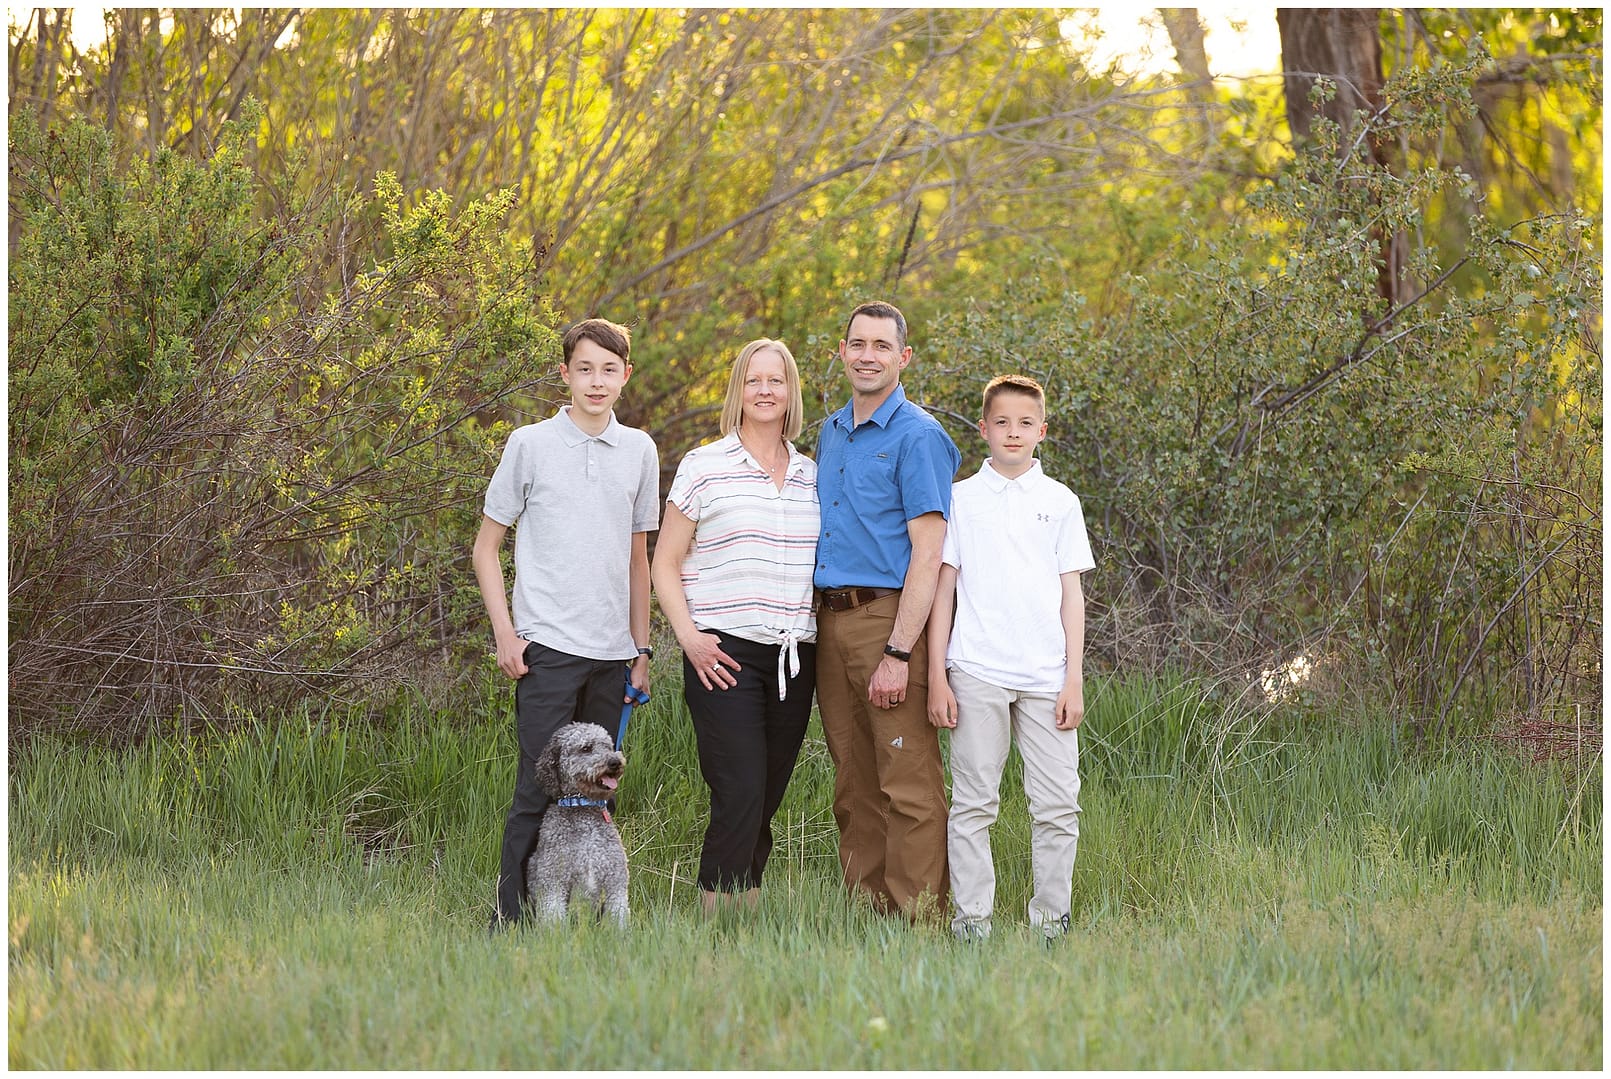 Boise family photos. Photos by Tiffany Hix Photography.